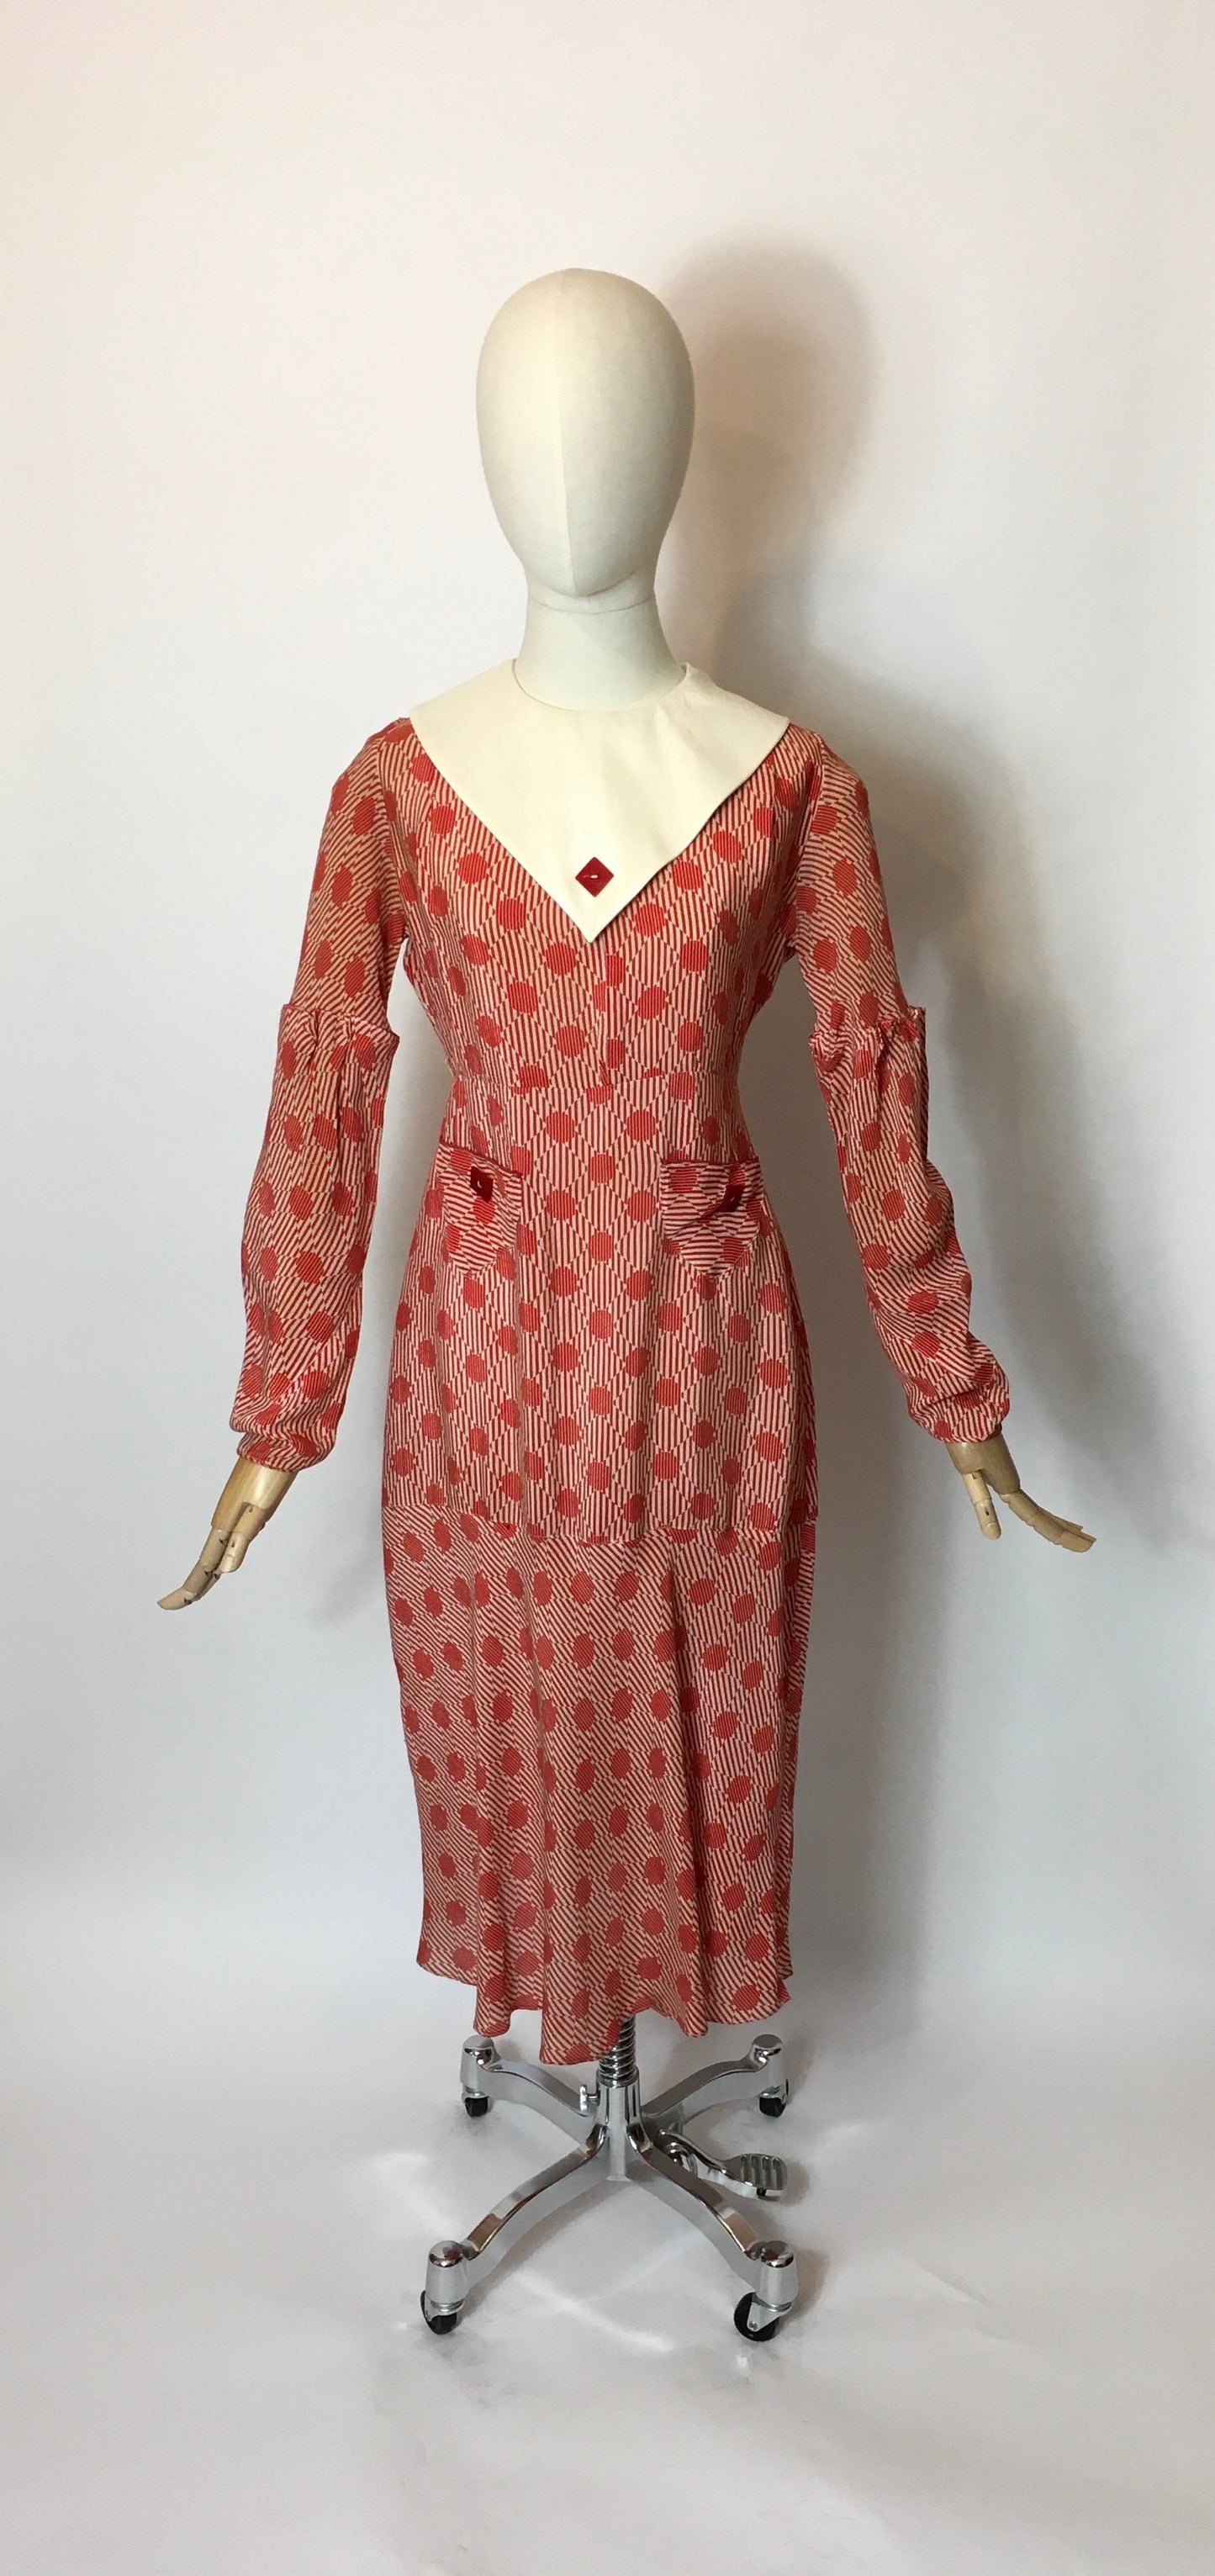 Original 1930’s Stunning Geometric Print Day Dress - Festival of Vintage Fashion Show Exclusive